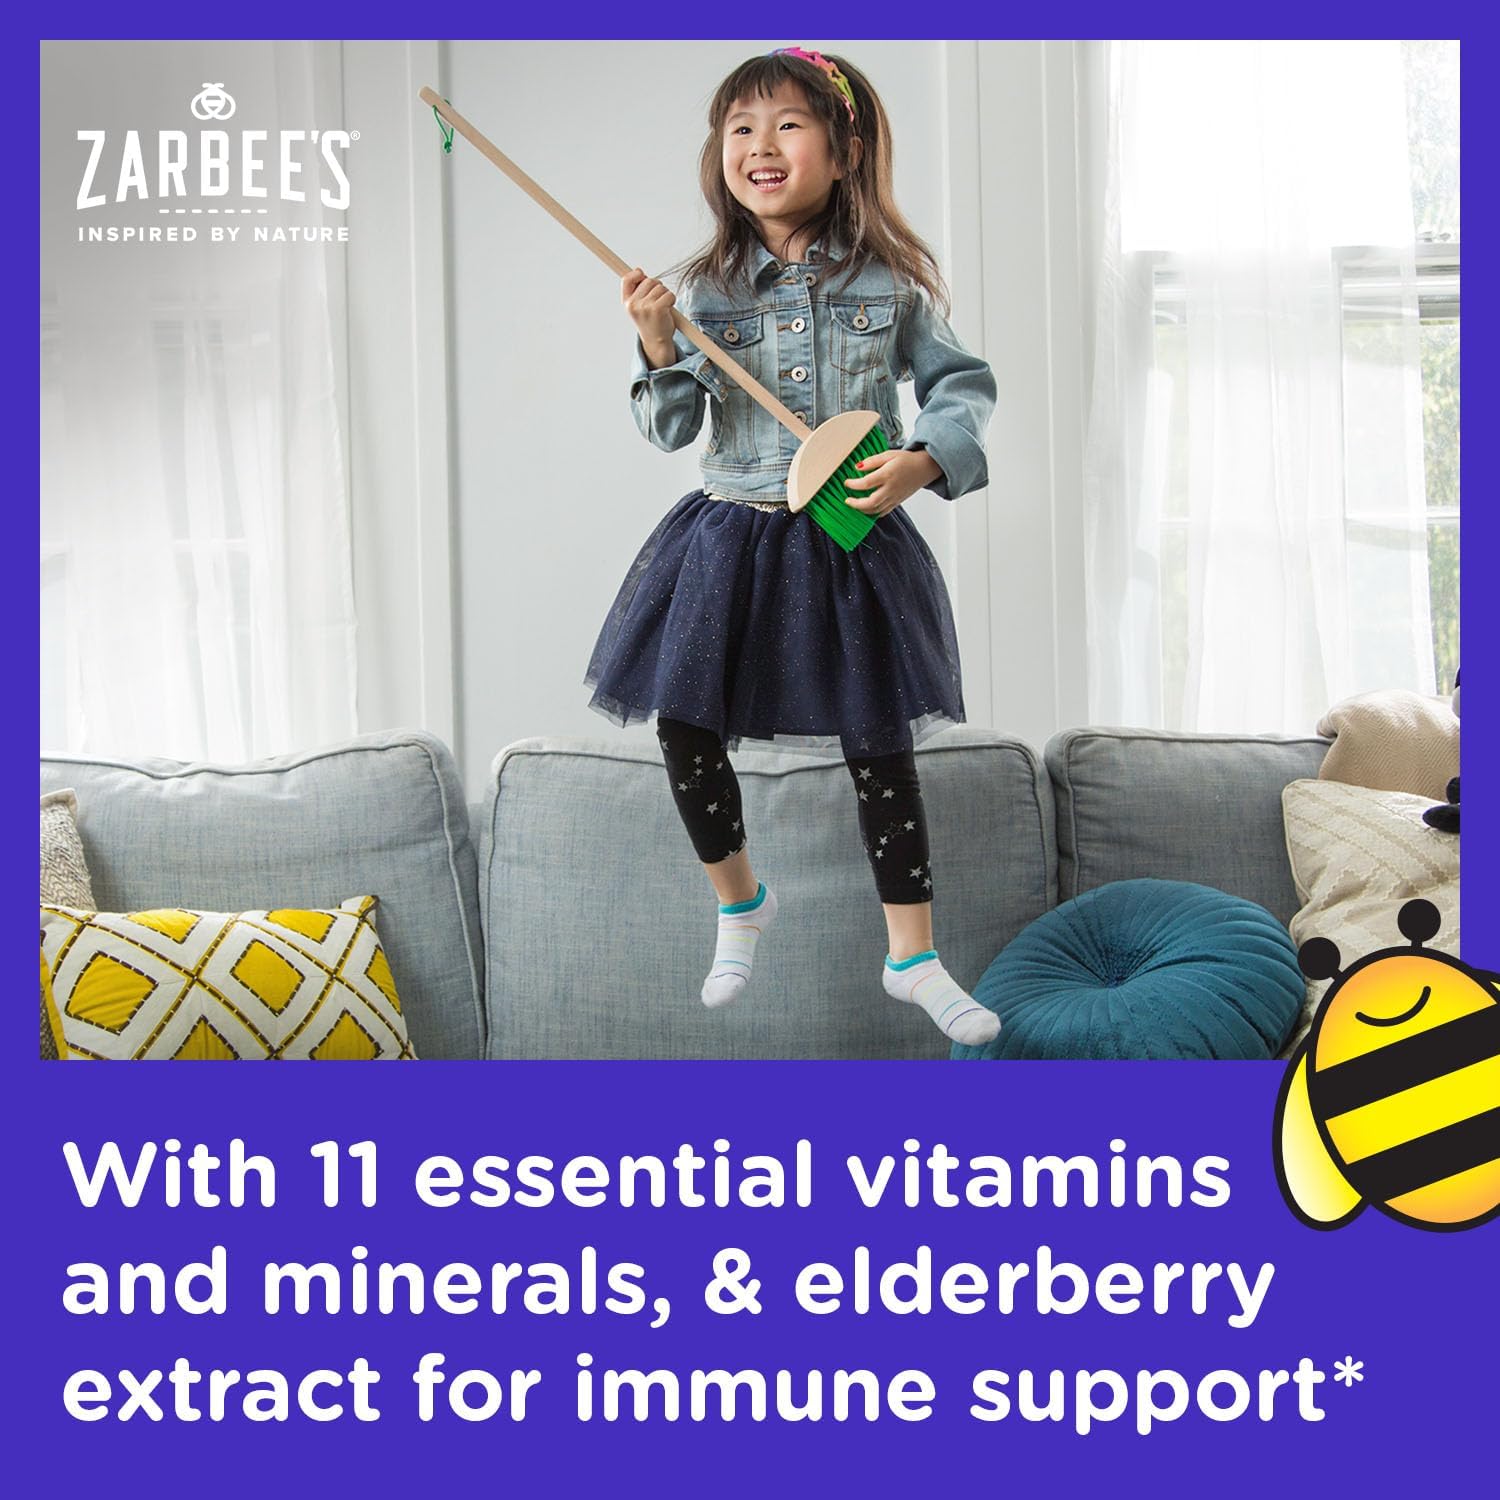 Zarbees Complete Kids Multivitamin Gummies + Immune Support, Children Vitamins Gummy with Vitamin A, C, D3, E, B6, B12, Folic Acid  Total B-complex, 70 Count